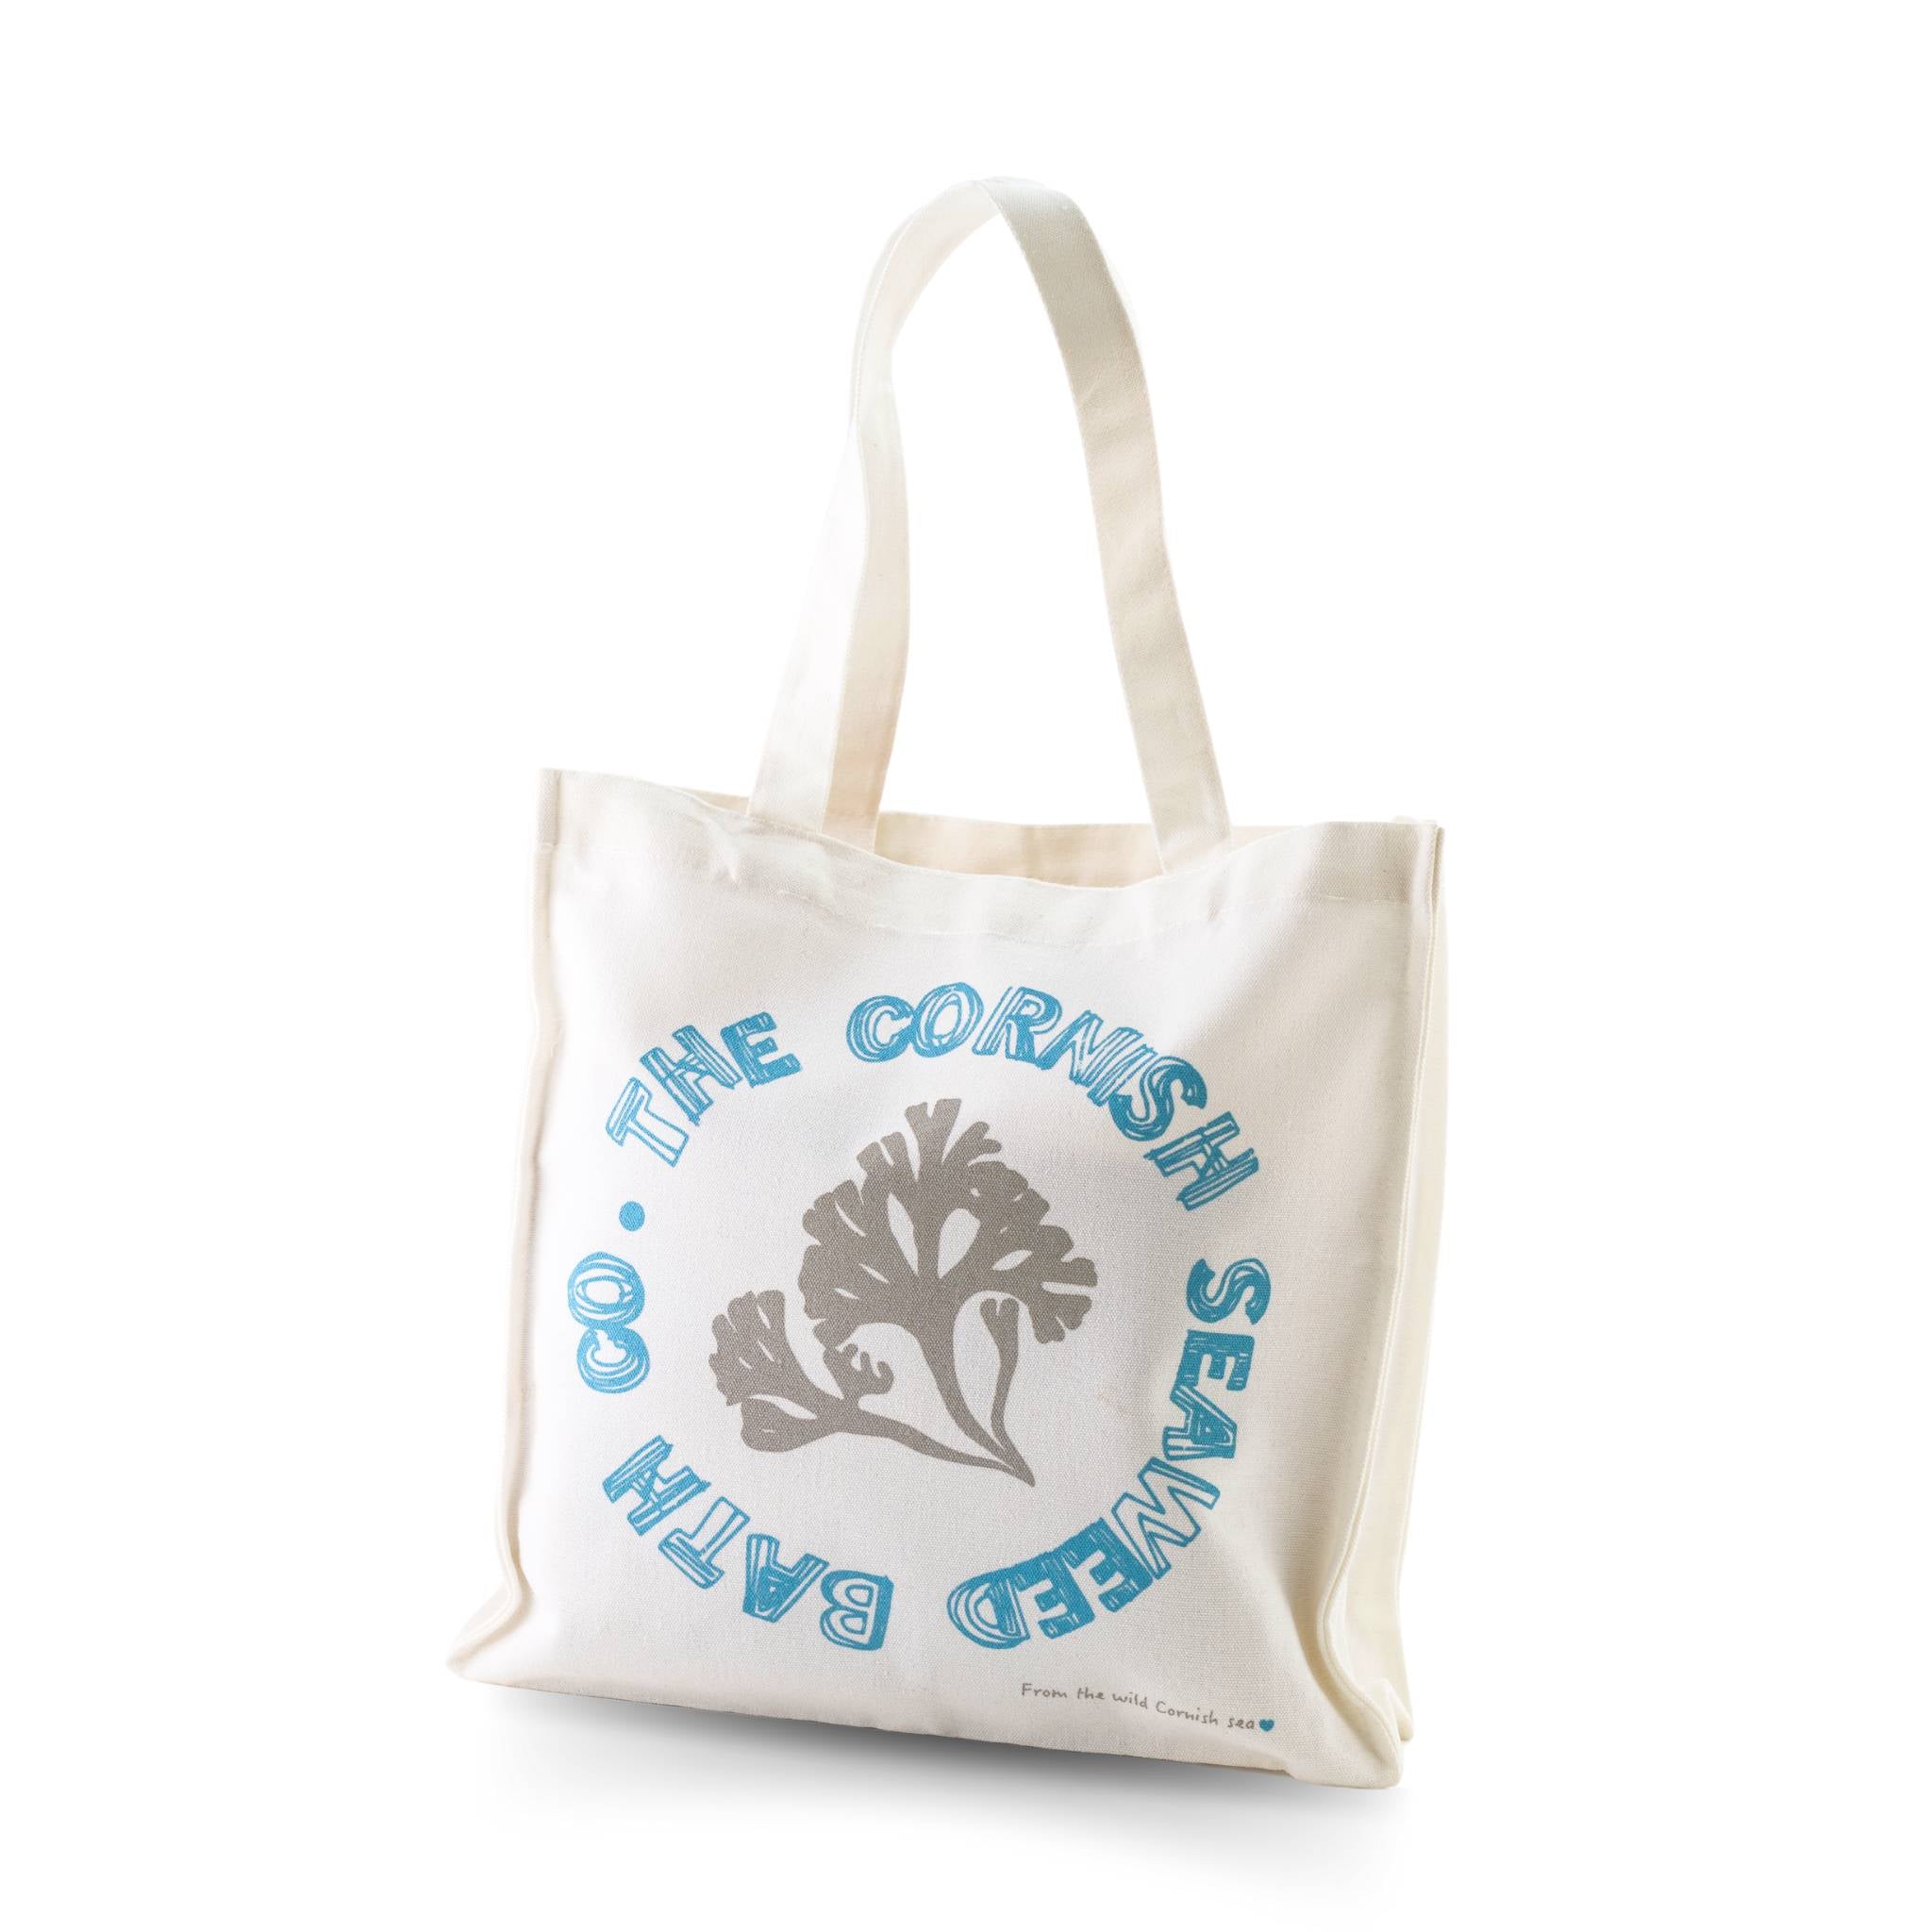 Printed Canvas Tote Bag - The Cornish Seaweed Bath Co.